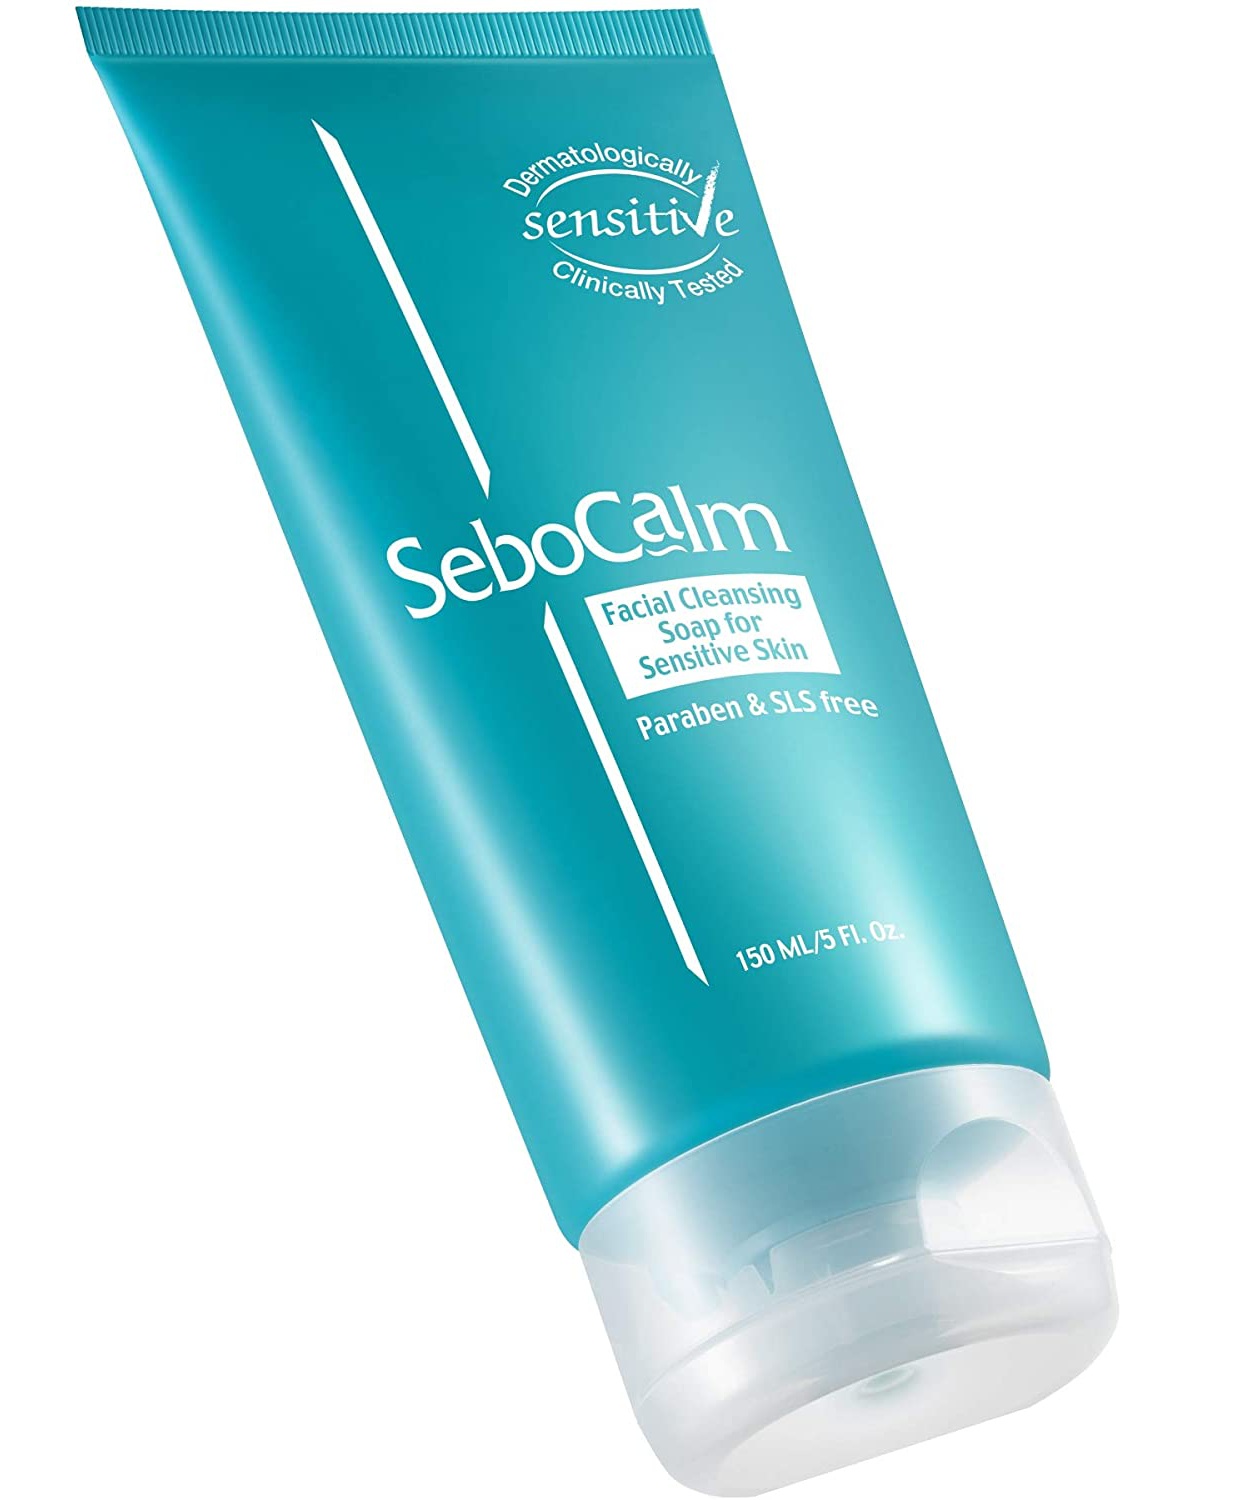 SeboCalm Facial Cleansing For Sensitive Skin